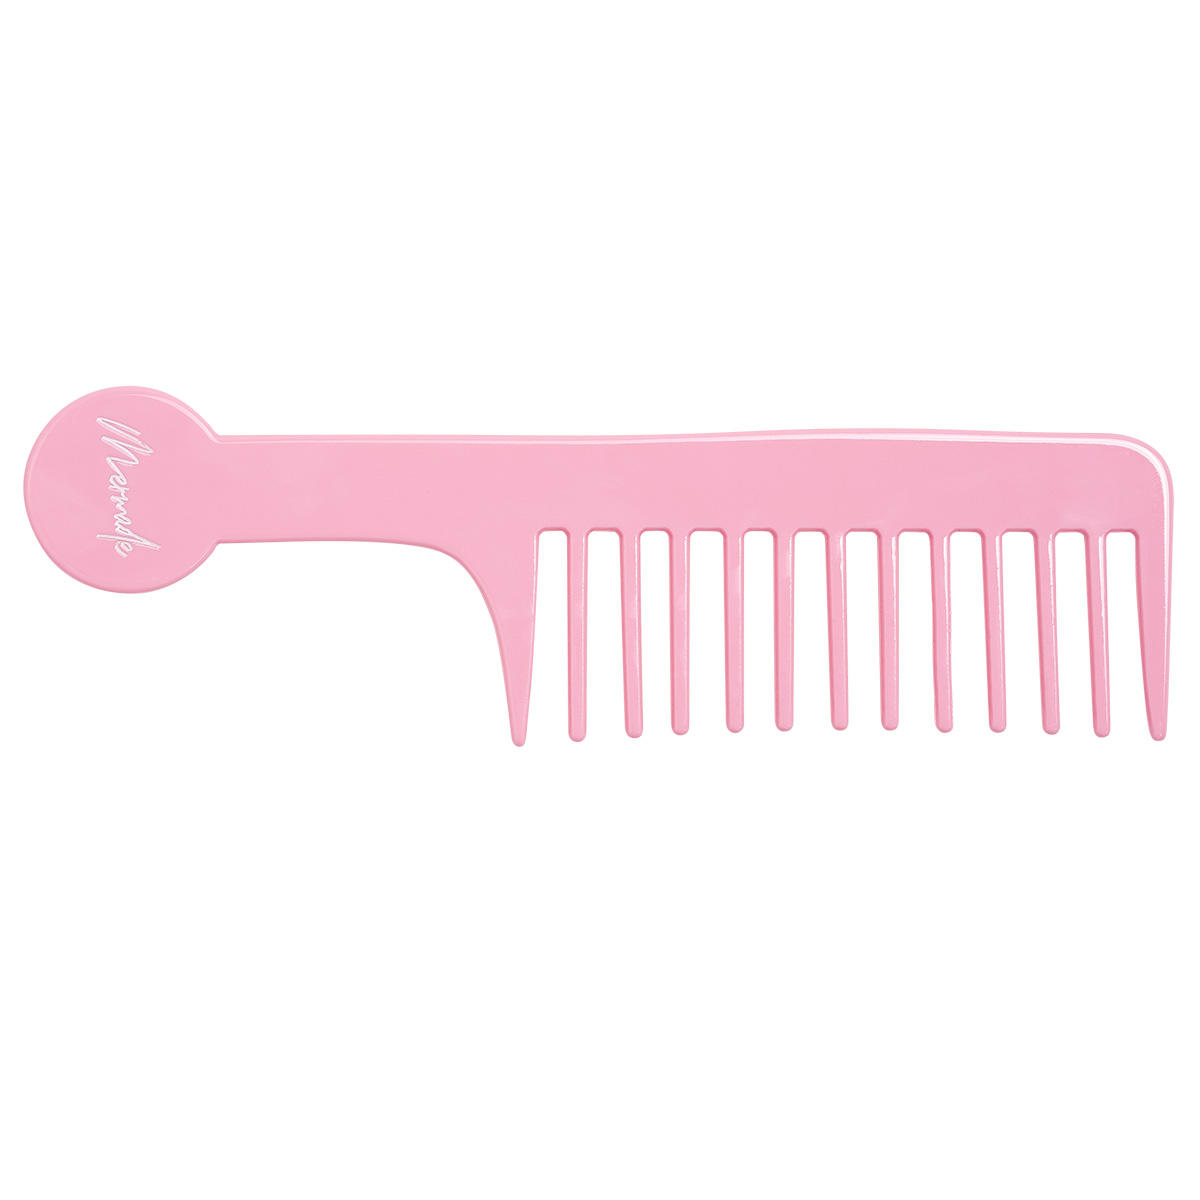 Mermade Hair The Comb Kit  - 7